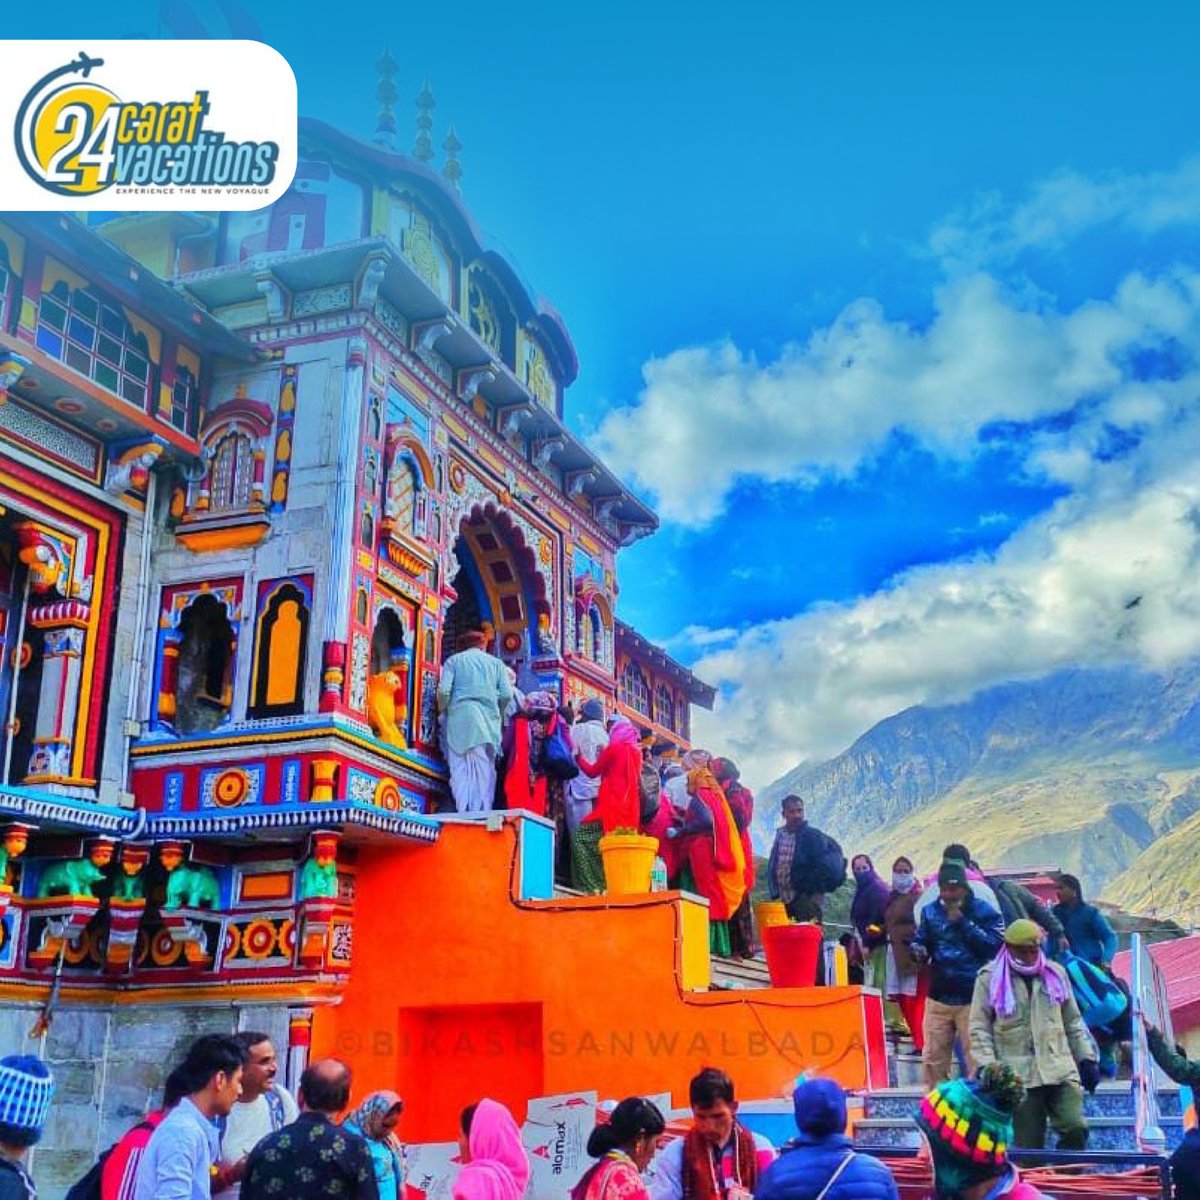 🌄 Explore the divine beauty of Uttarakhand - The Land of Gods! 🙏

OUR OFFICES
📍Ahmedabad
📍Surat
📍Kolkata

☎️ +91 78904 45522
📧 letsgo@24caratvacations.com

#uttarakhand #himalayas #uttarakhandtourism #ahmedabad #kolkata #surat #toursandtravels #24caratvacations